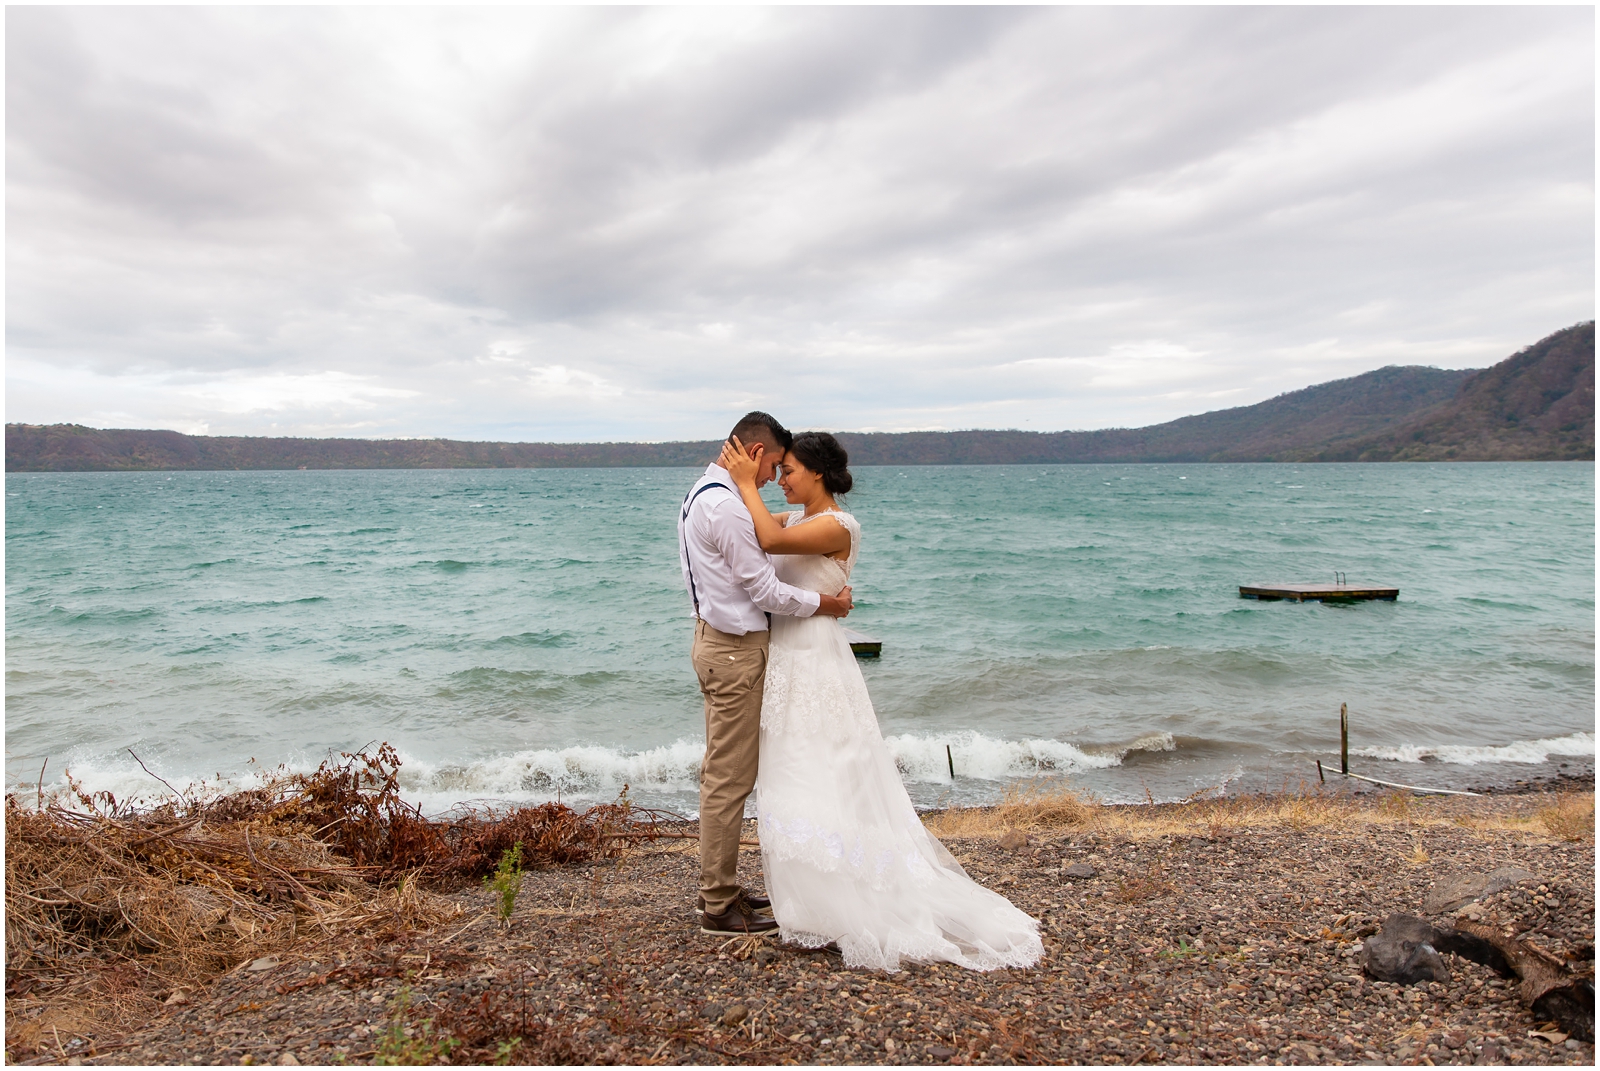 This couple had an epic Nicaragua adventure wedding.